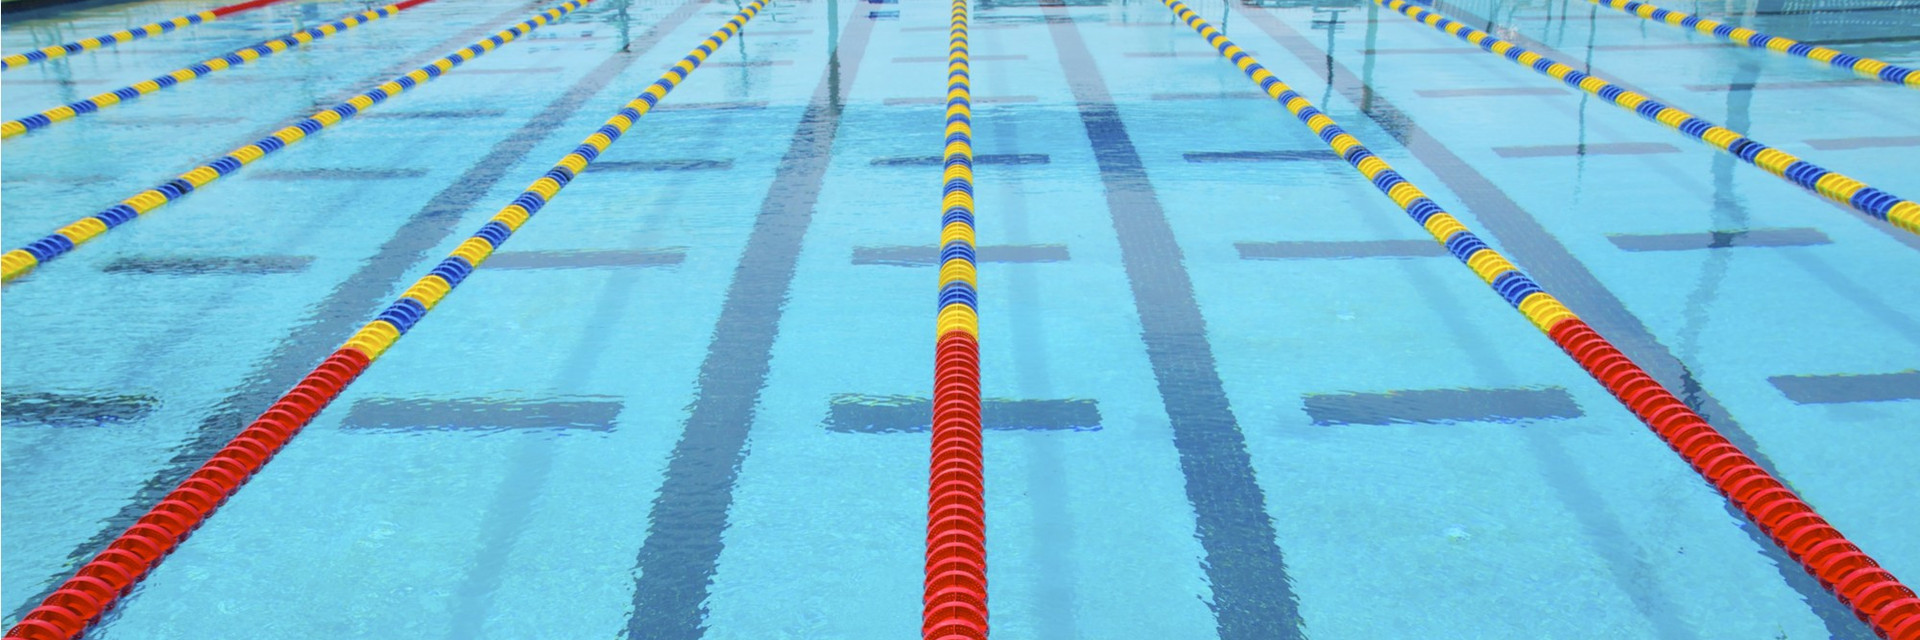 olympic swimming pool